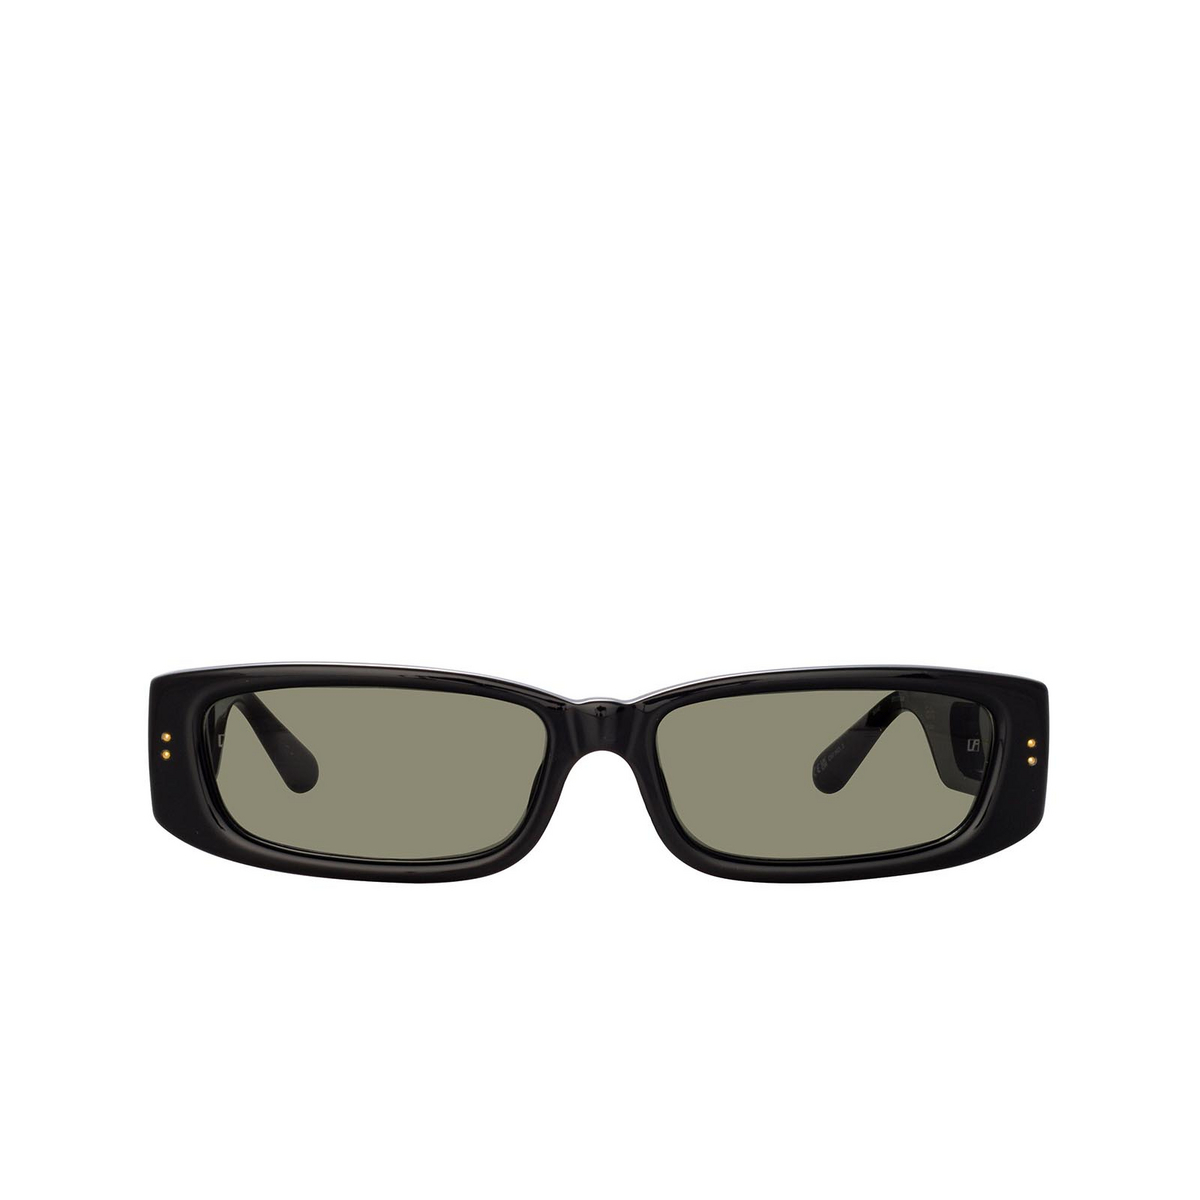 Linda Farrow TALITA Sunglasses 1 Black / Yellow Gold - front view